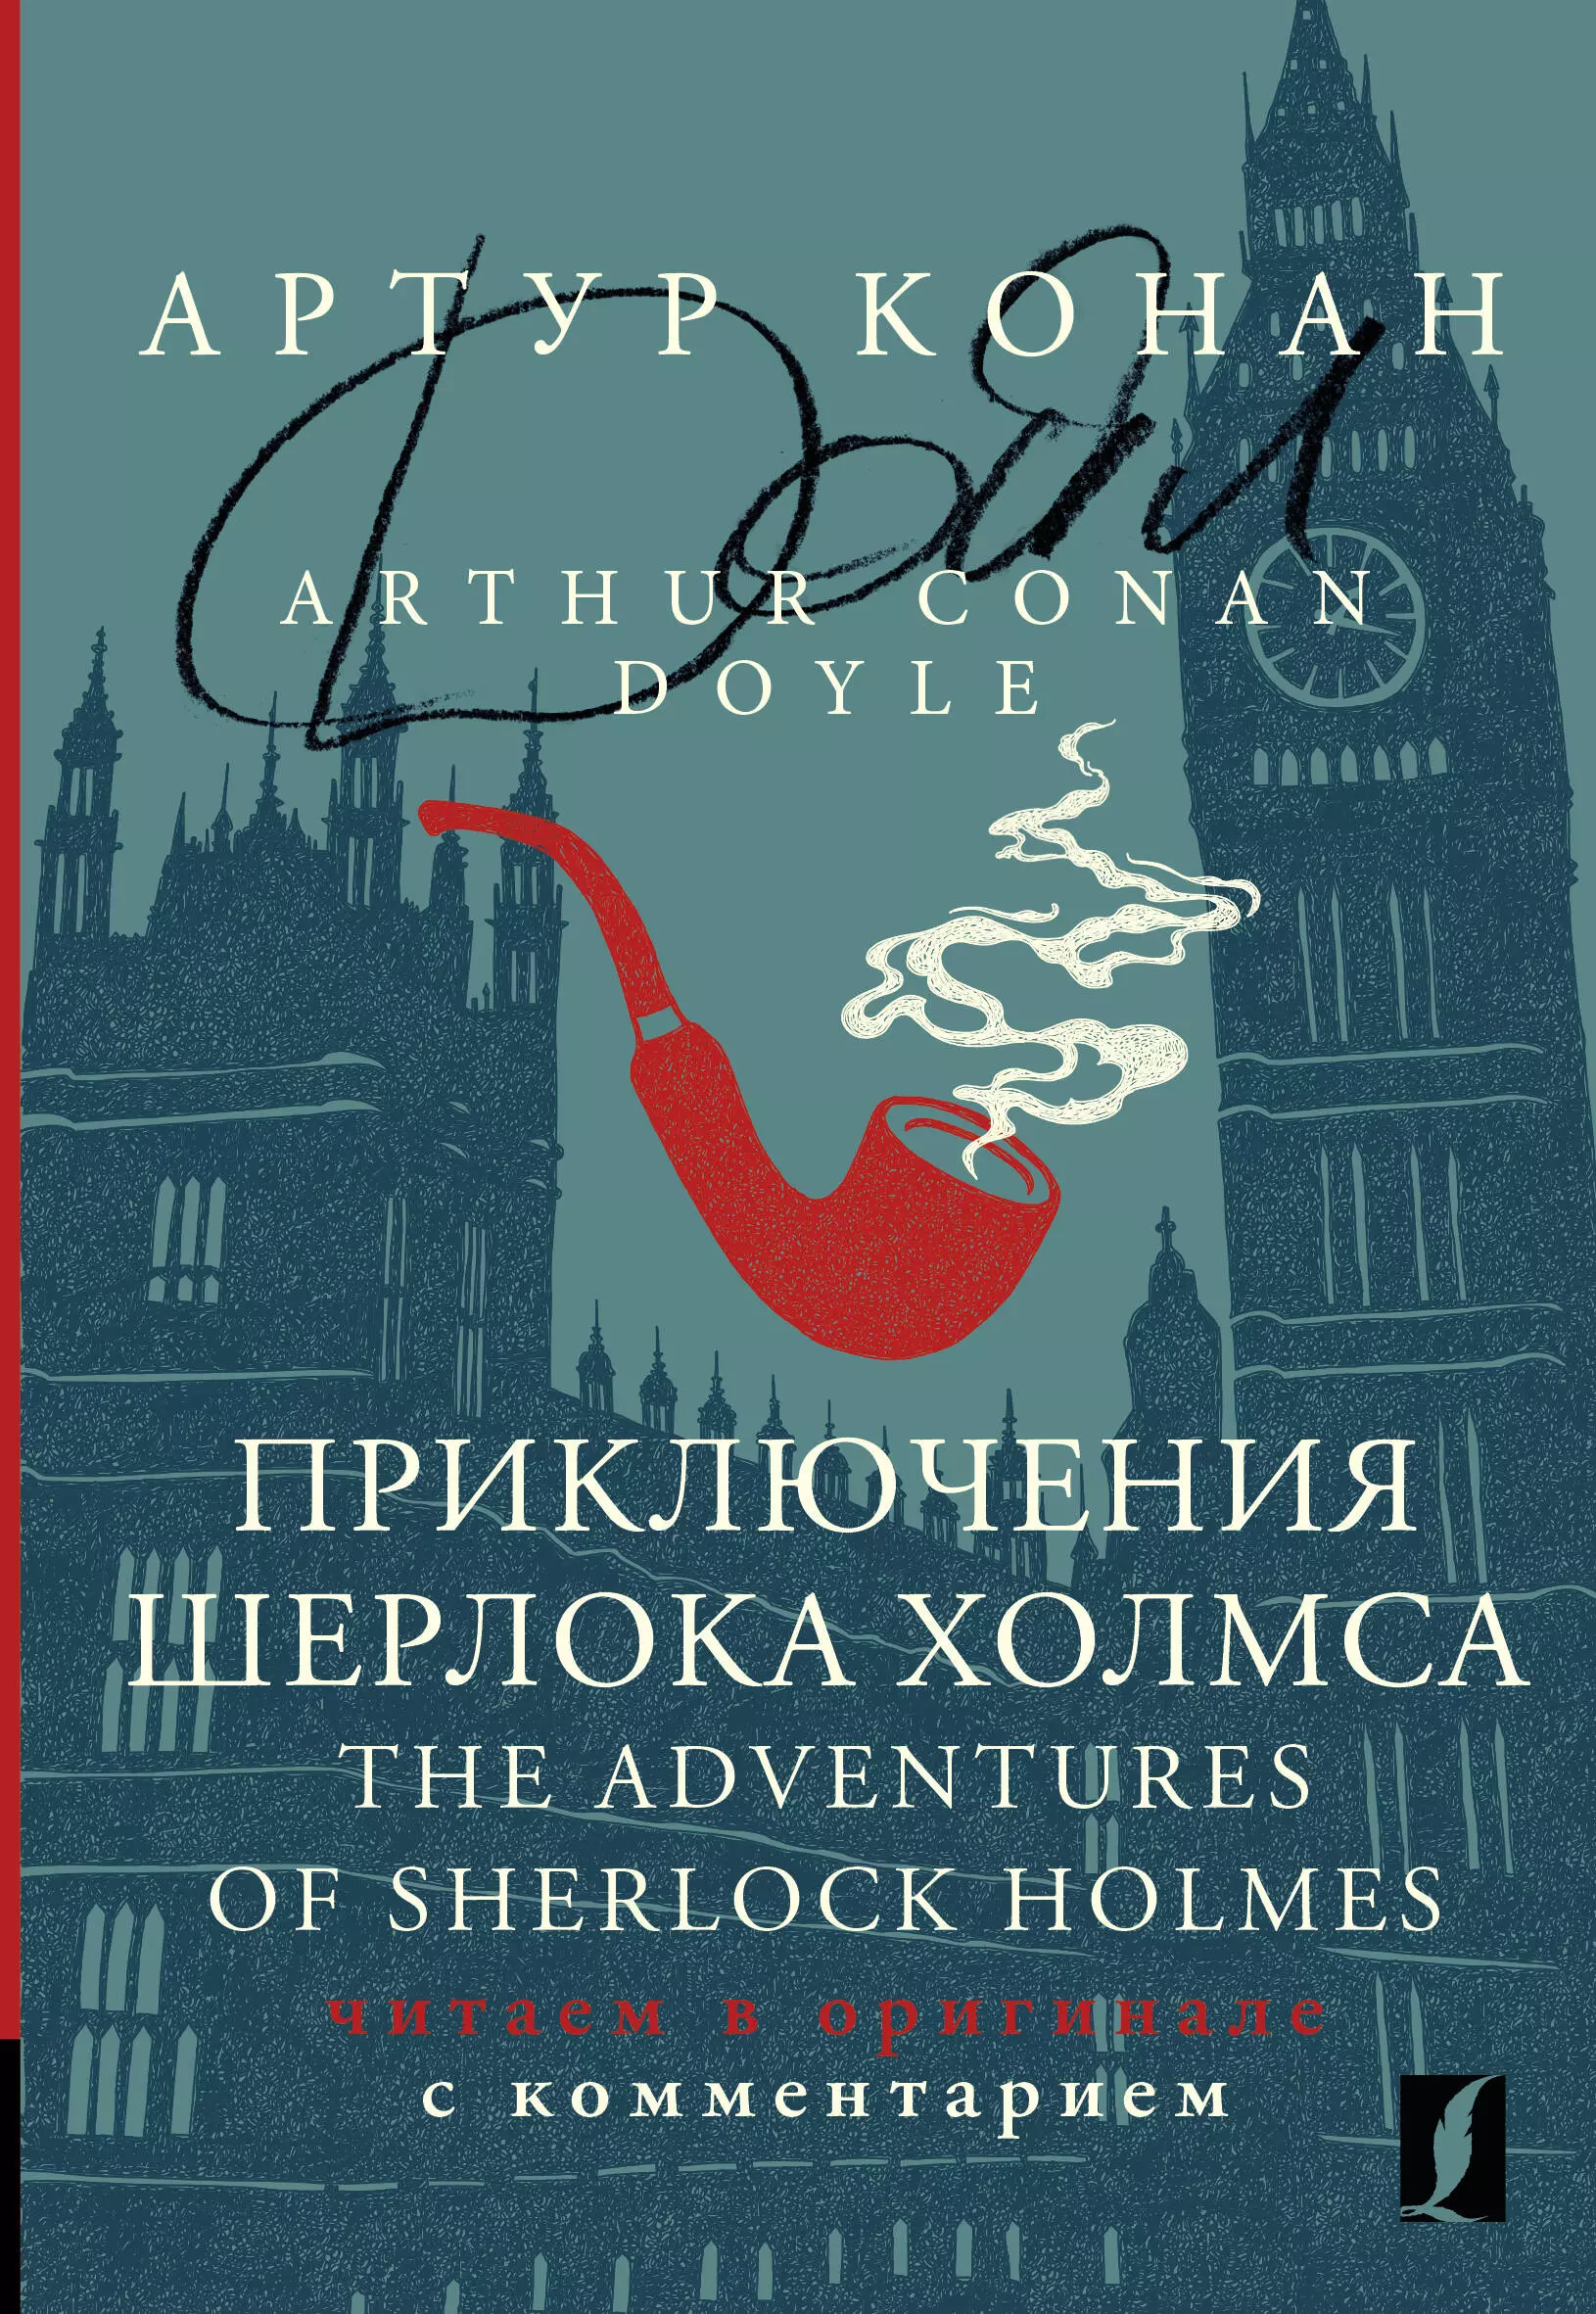 Дойл Артур Конан Приключения Шерлока Холмса / The Adventures of Sherlock Holmes: читаем в оригинале с комментарием